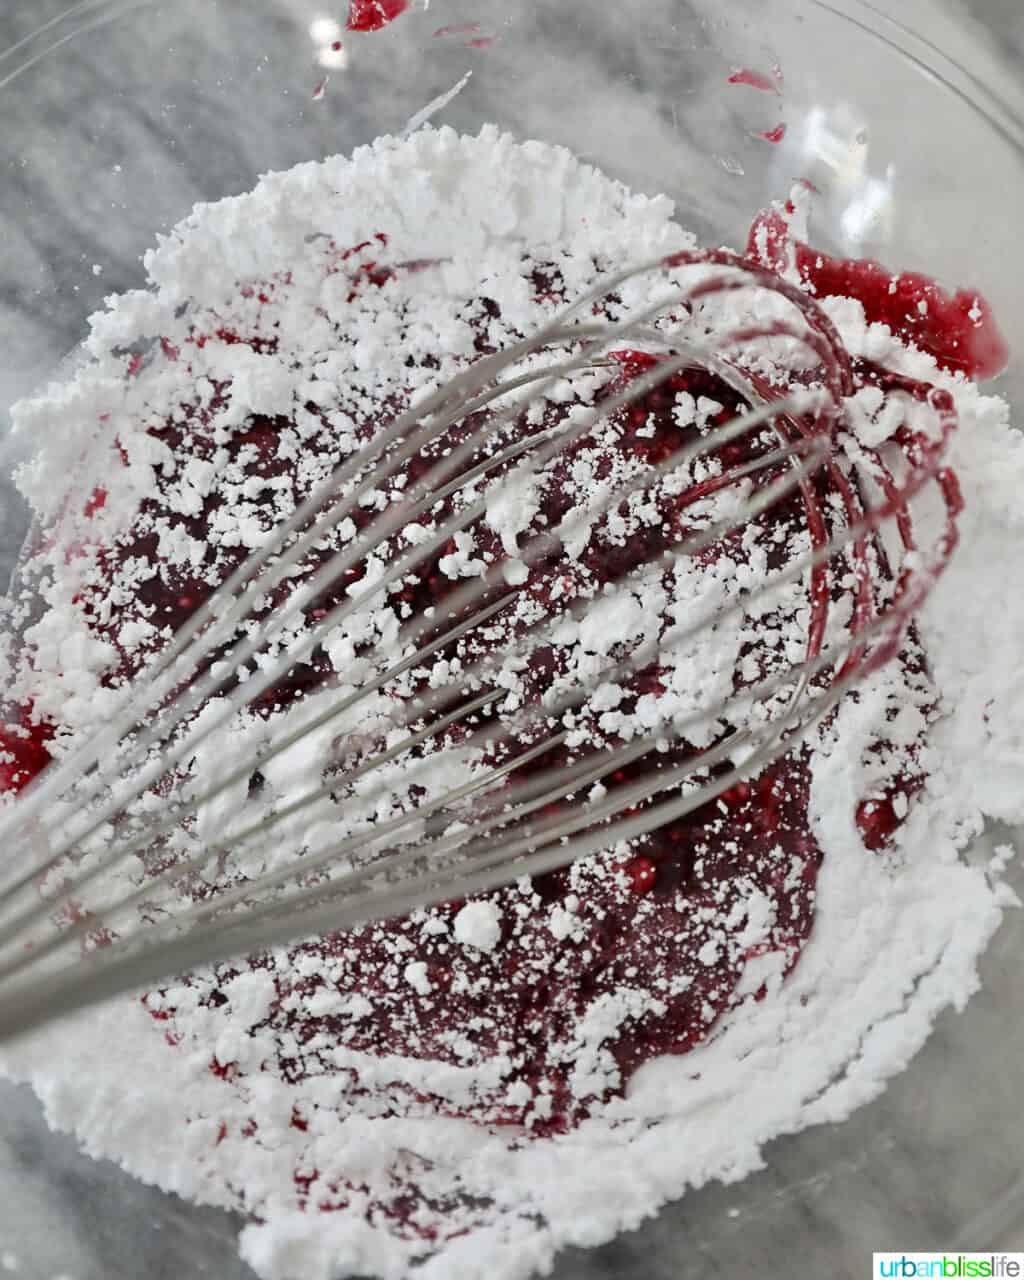 adding powdered sugar to blackberries to make a glaze